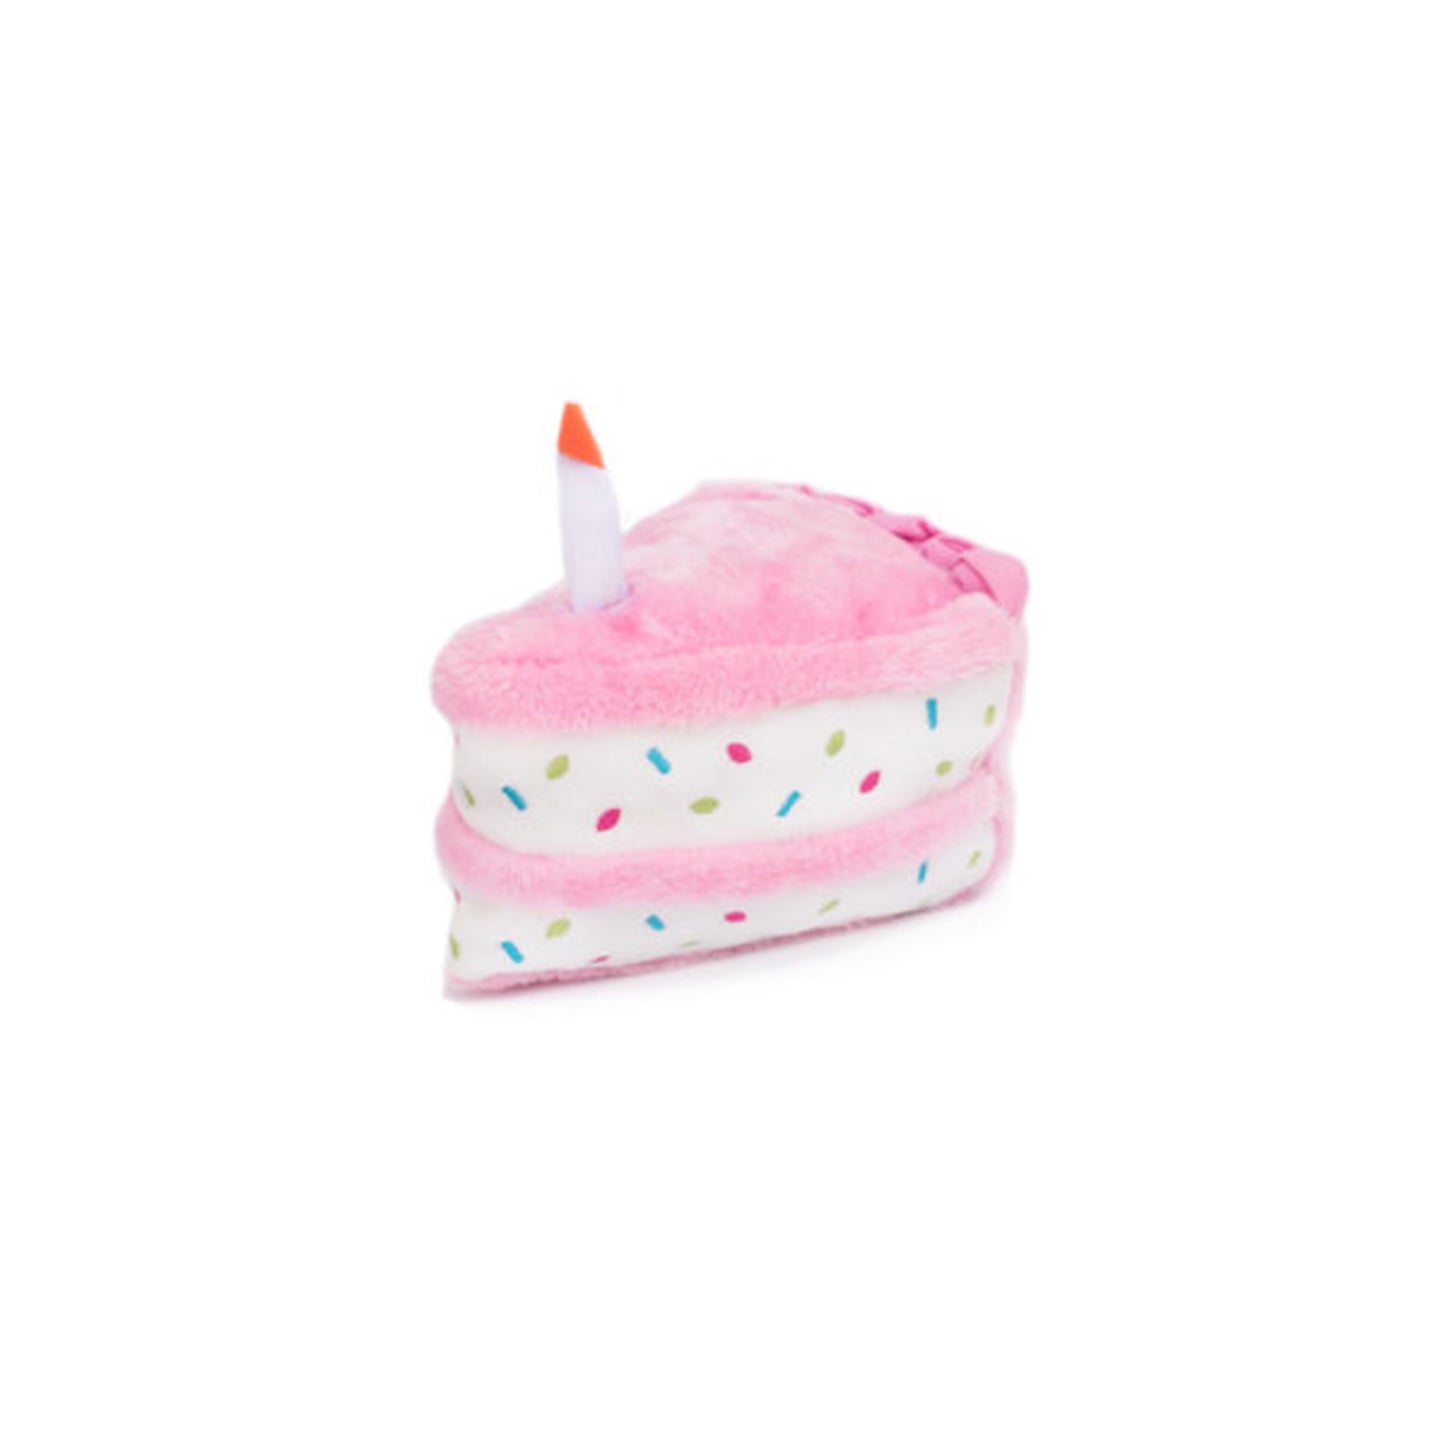 NomNomz, Cupcakes, Birthday Cakes, Squeakie Pads, Skinny Peltz, Squeakie Buddies, & ZippyTuff Teetherz